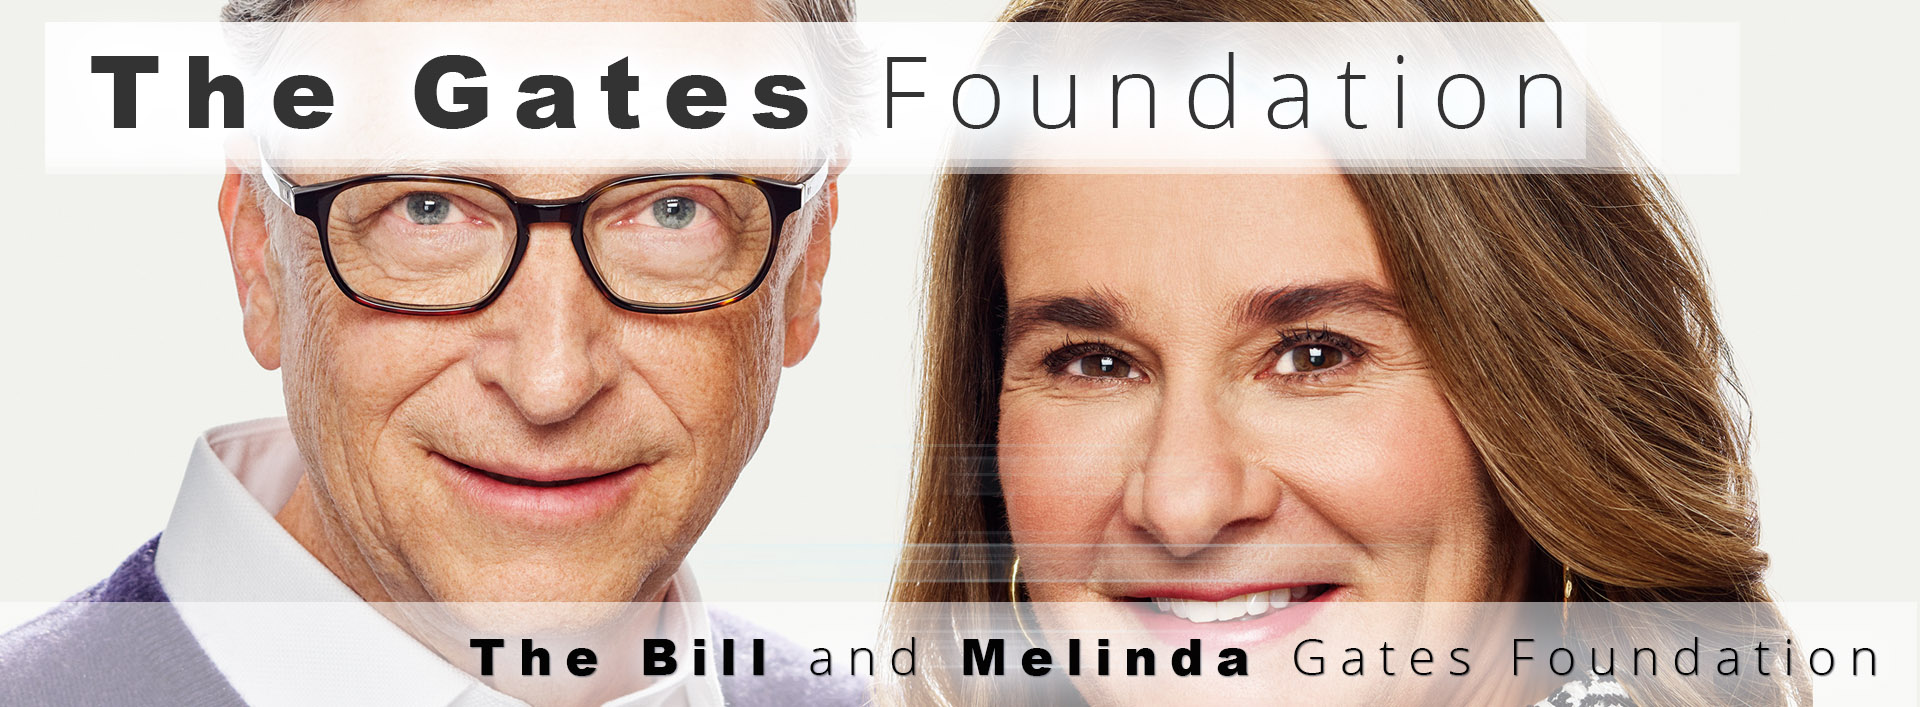 The-Gates-Foundation--The-Bill-and-Melinda-Gates-Foundation